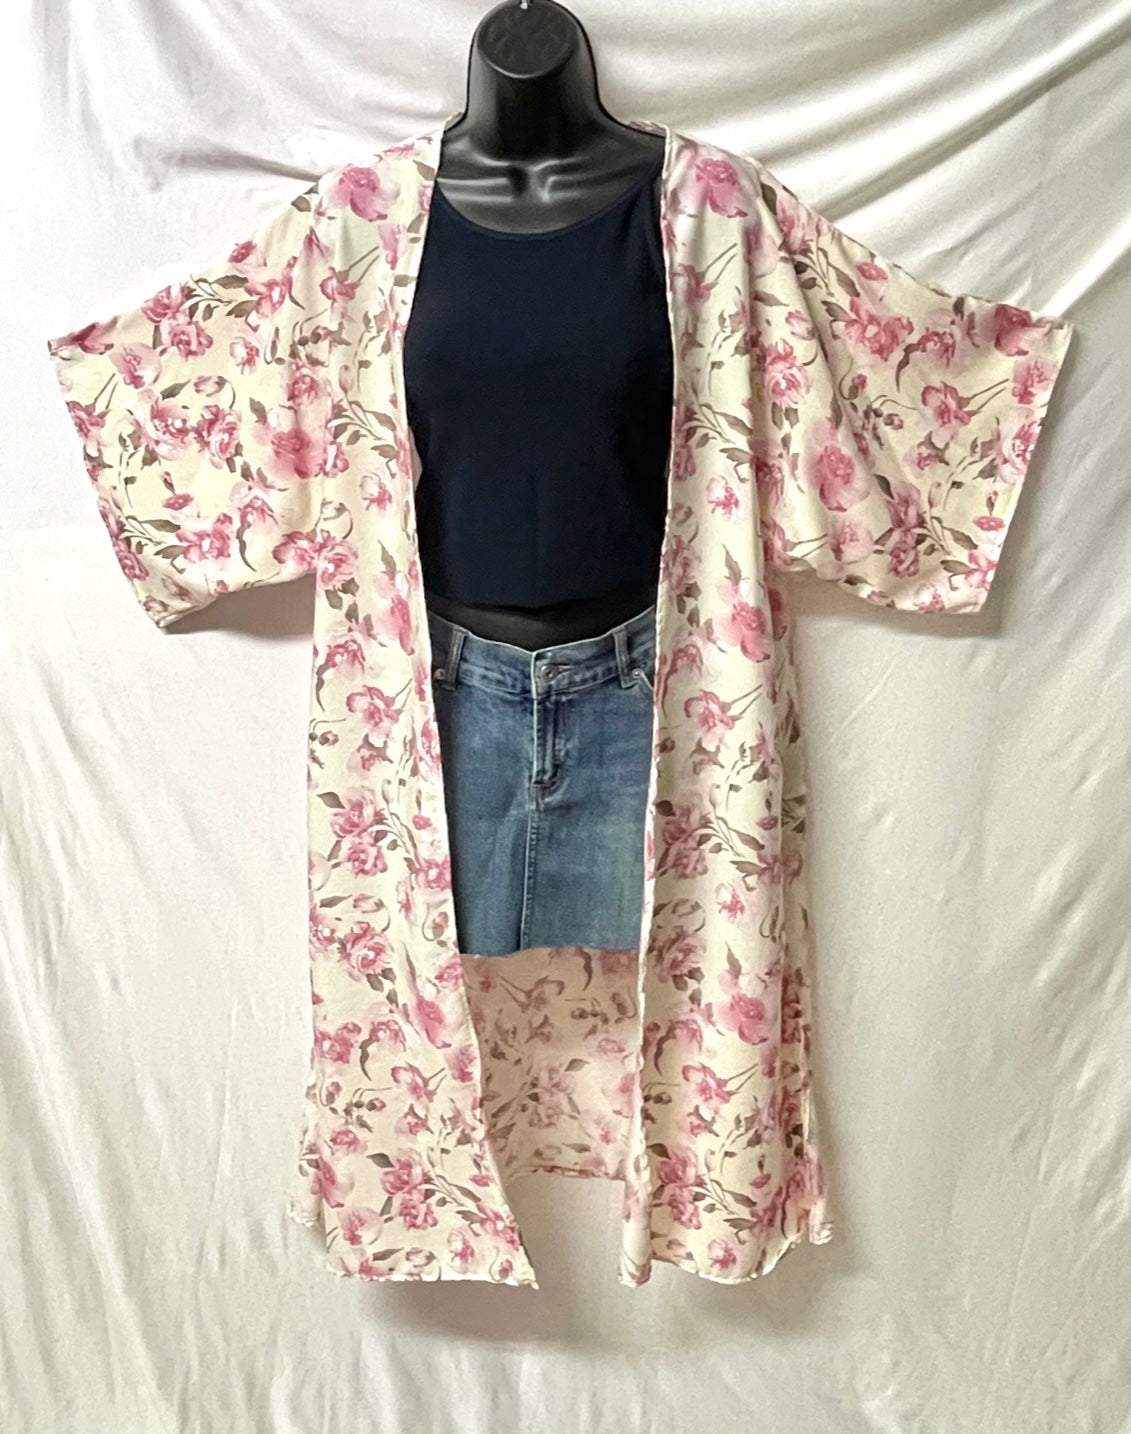 Floral Full Body Robe, One Size, robe, robe style, kimono style, summer, summer look, spring summer, chic, boho, boho chic